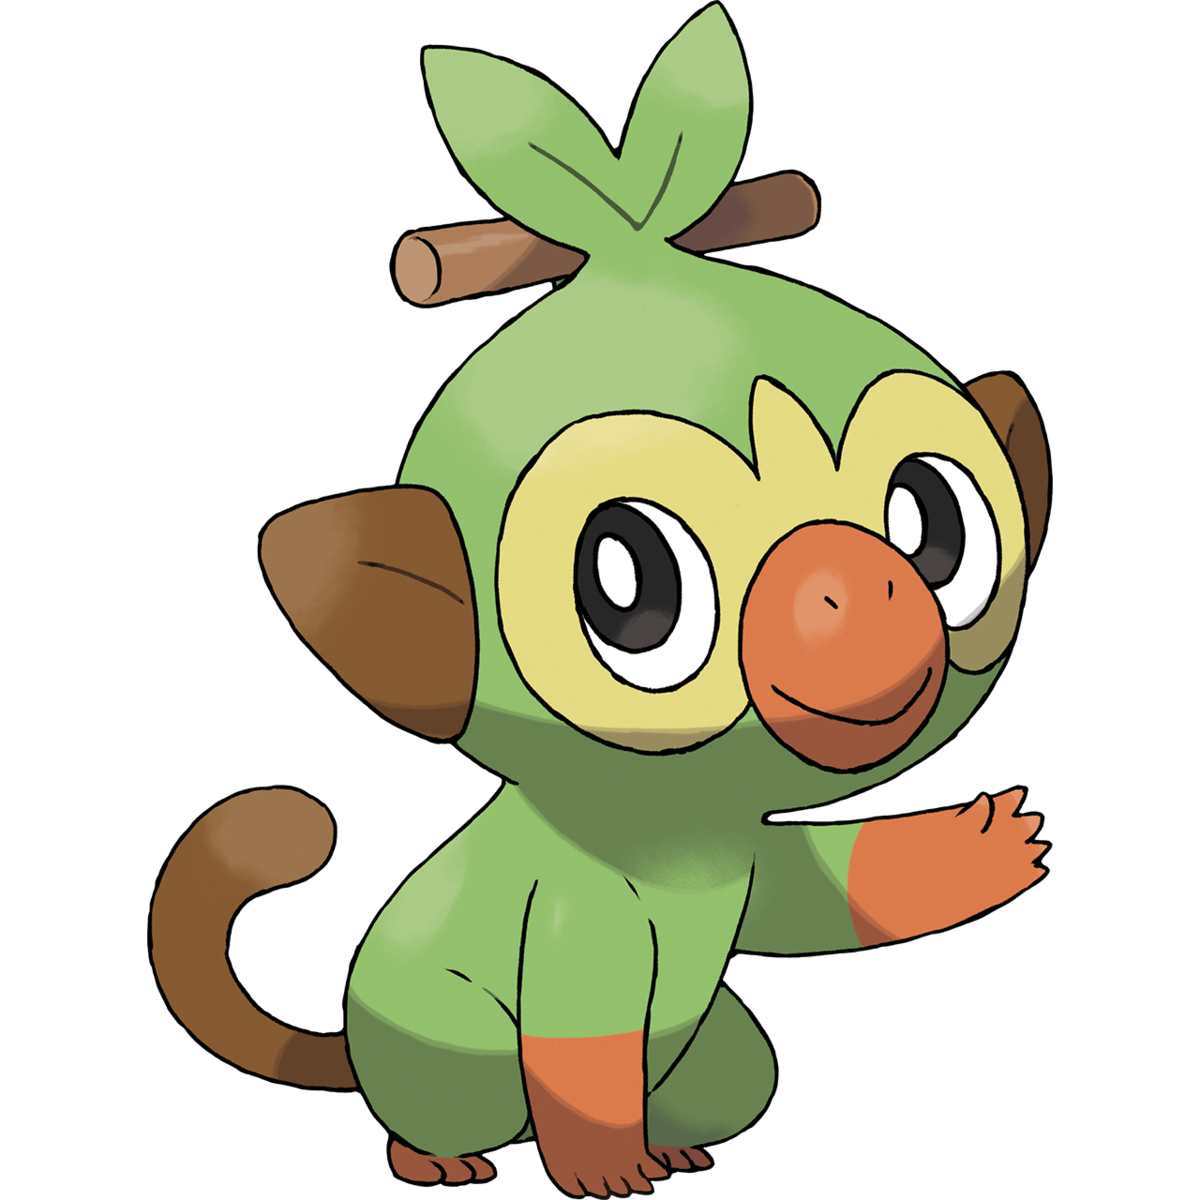 Grookey (Pokémon), The Community Driven Pokémon